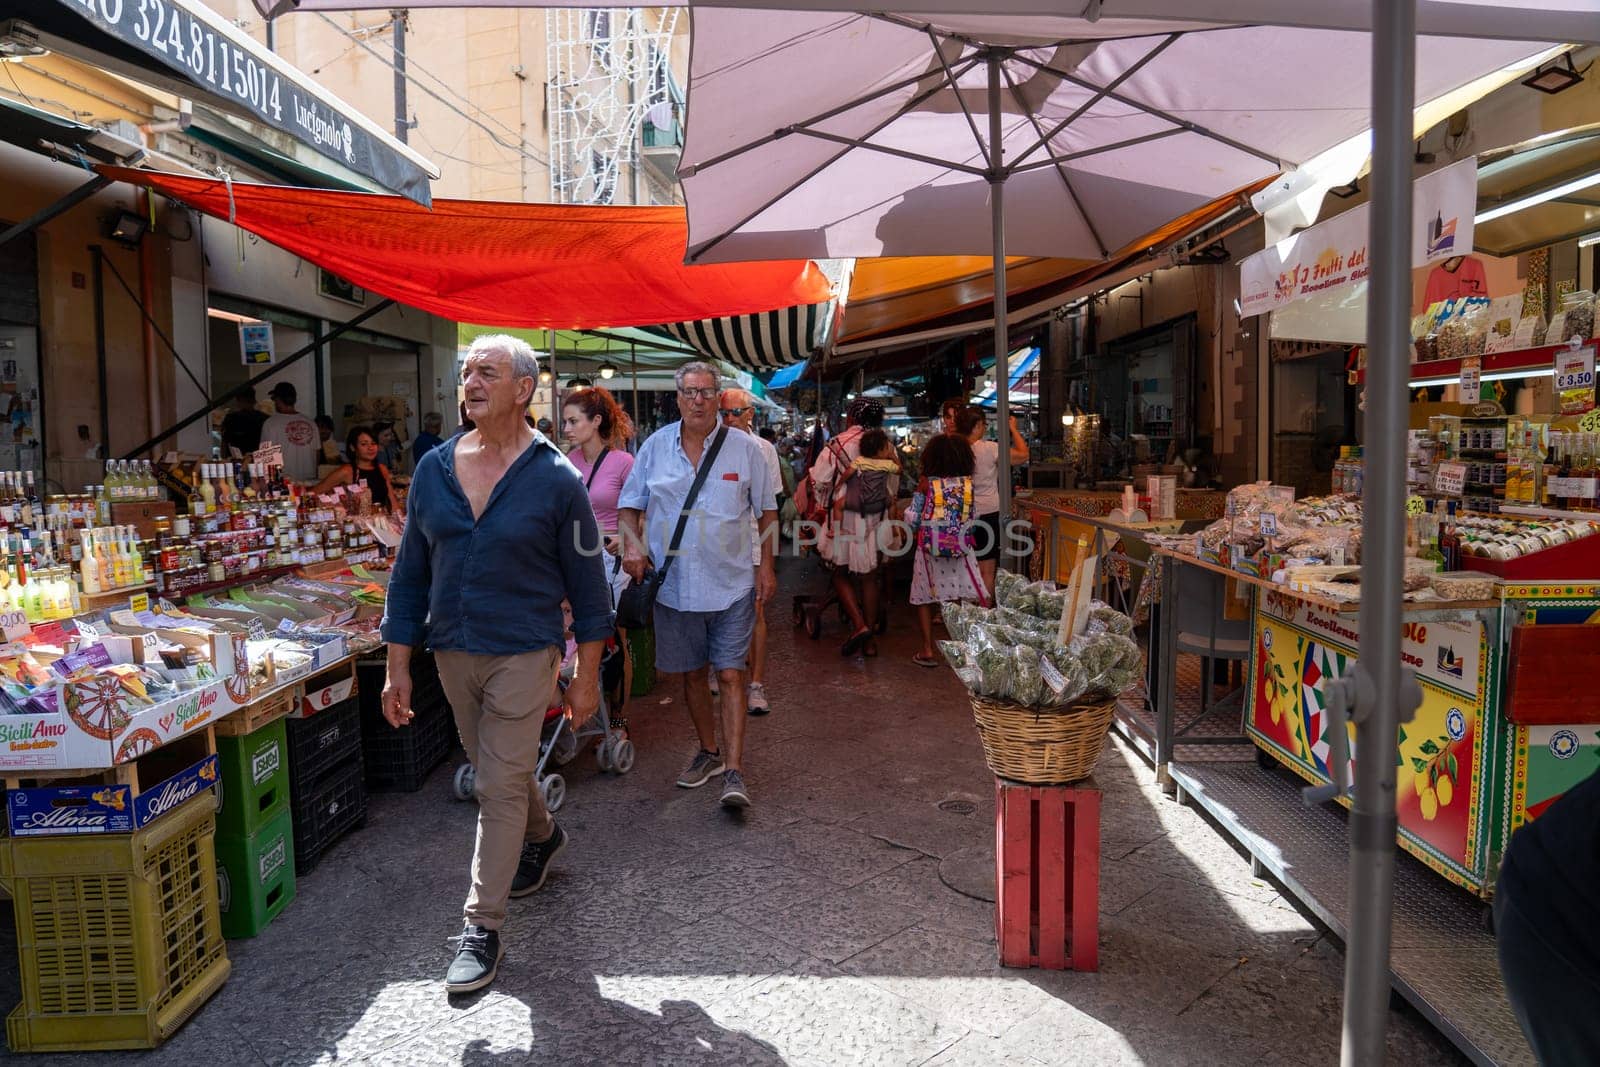 Ballaro Market in Palermo, Sicily by oliverfoerstner